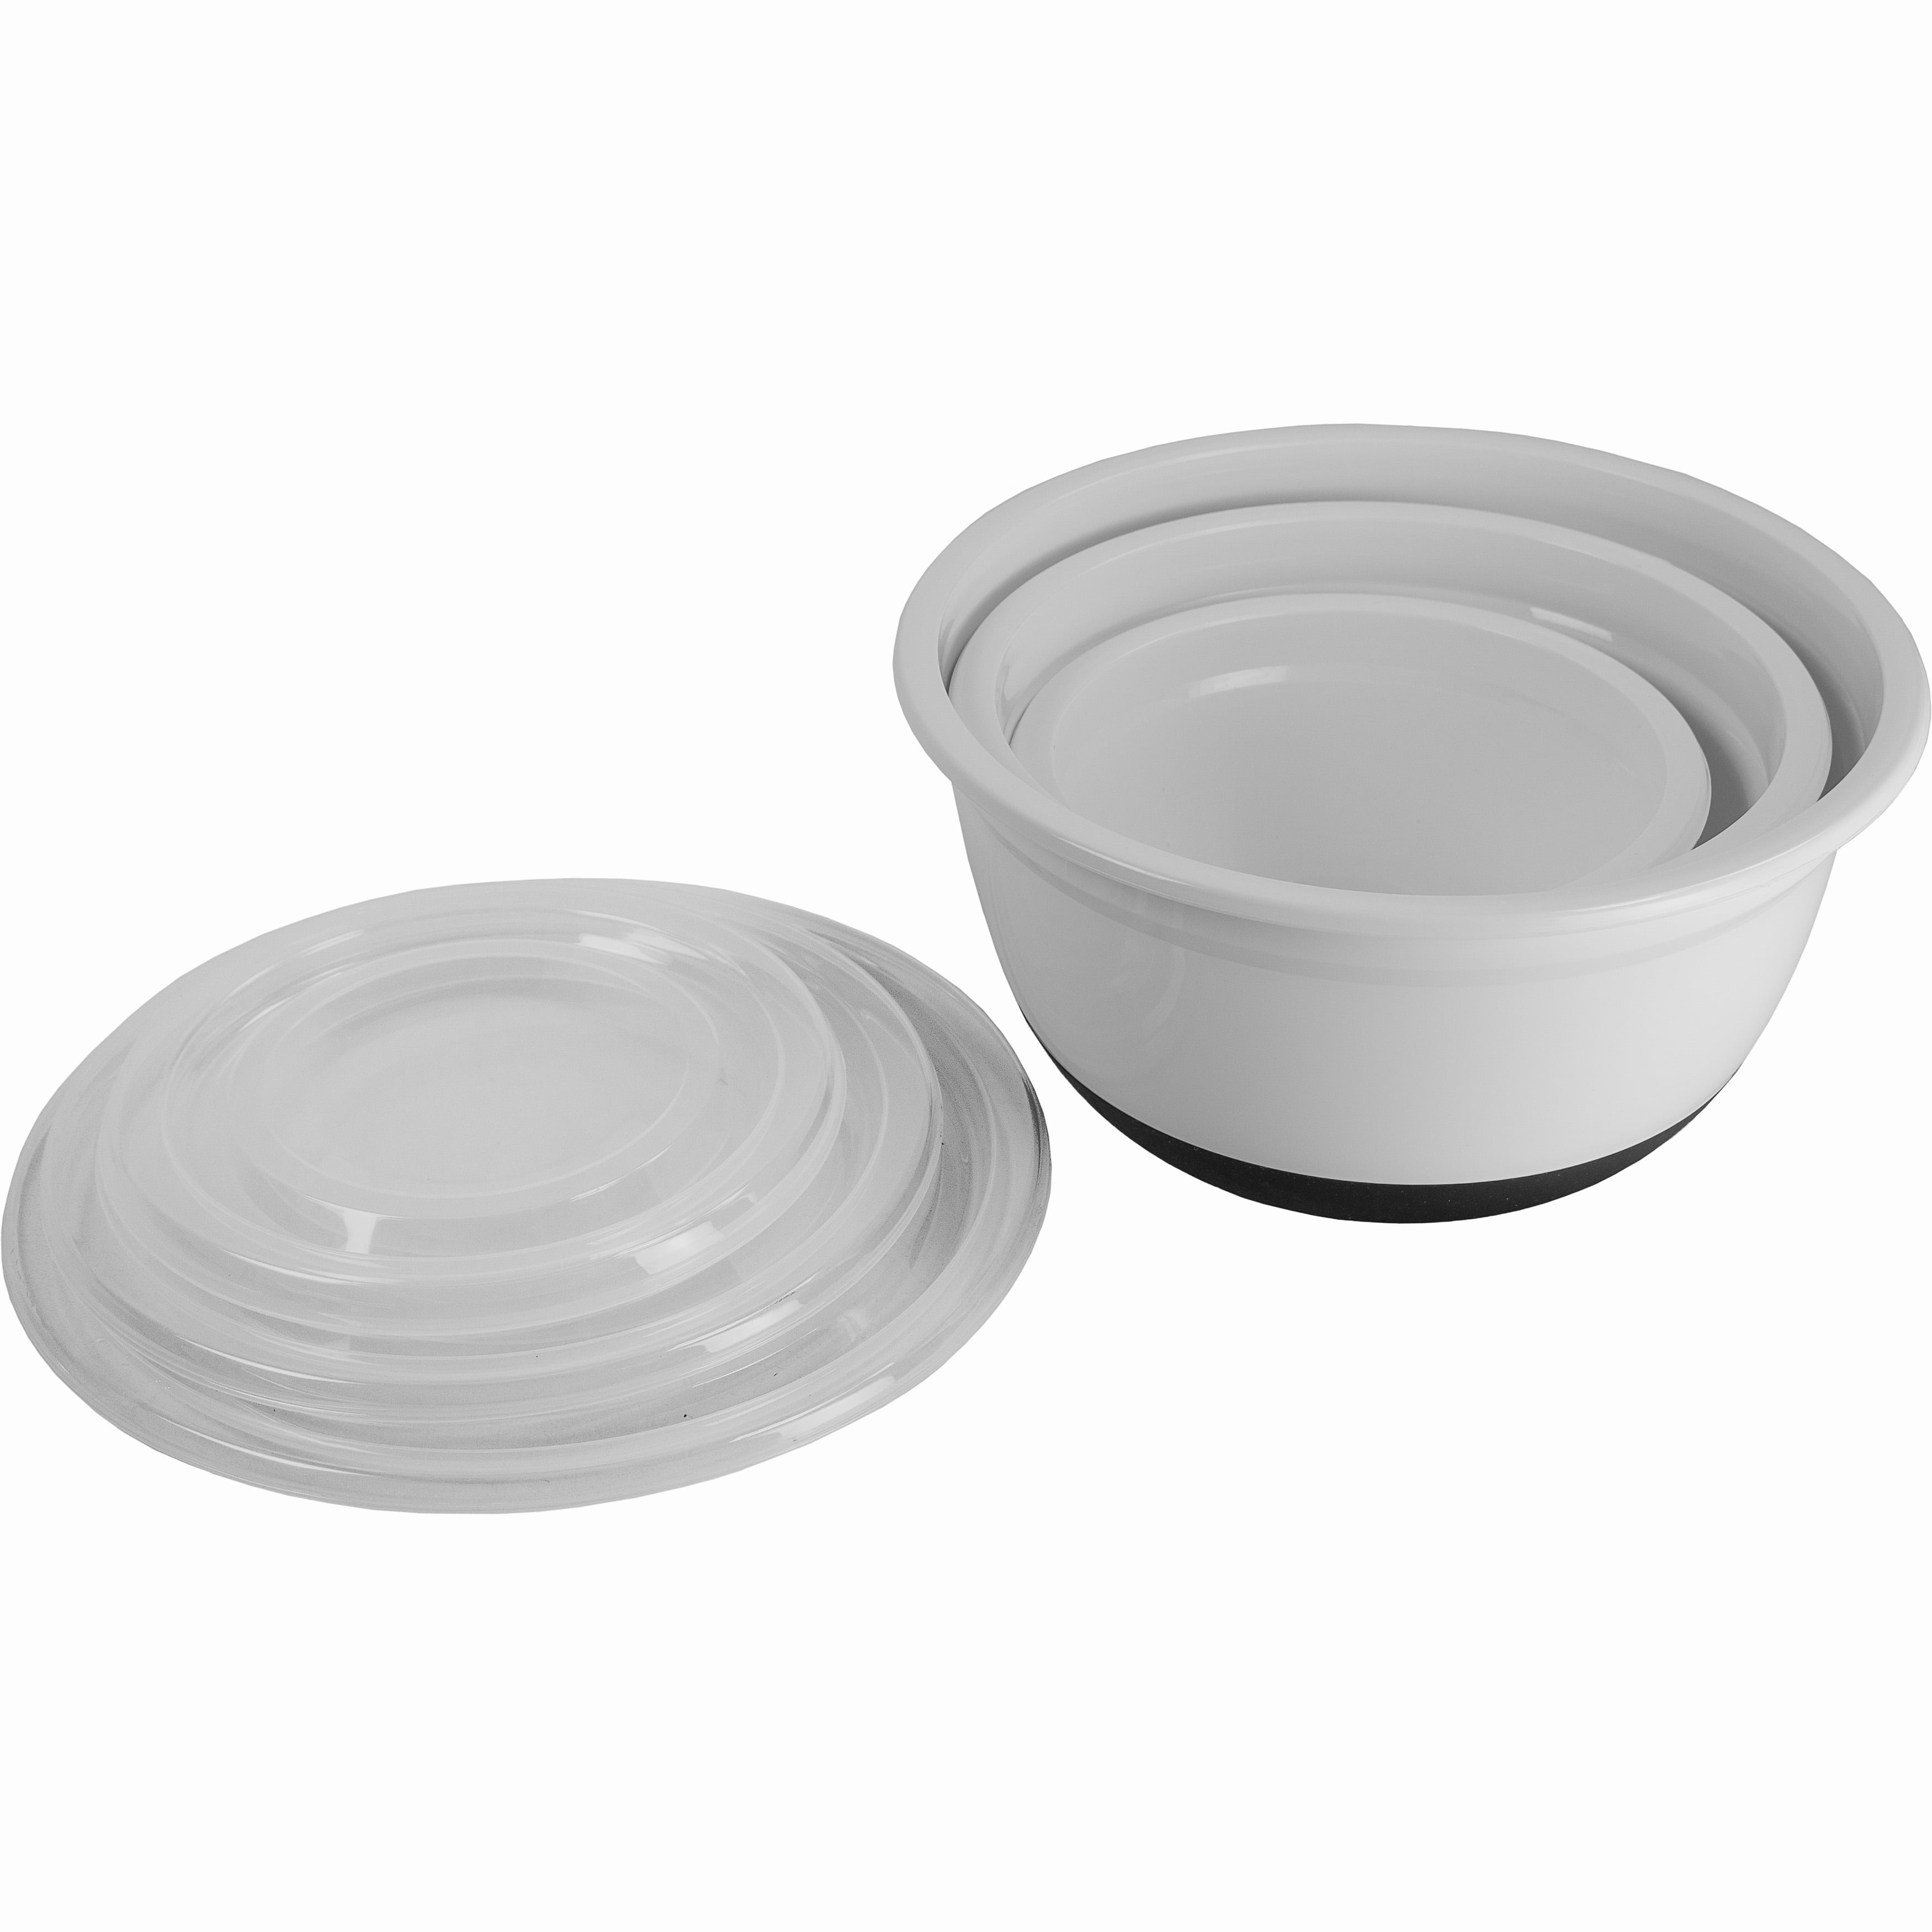 MONKA Premium Plastic Mixing Bowls With Non Slip Bottom & Pouring